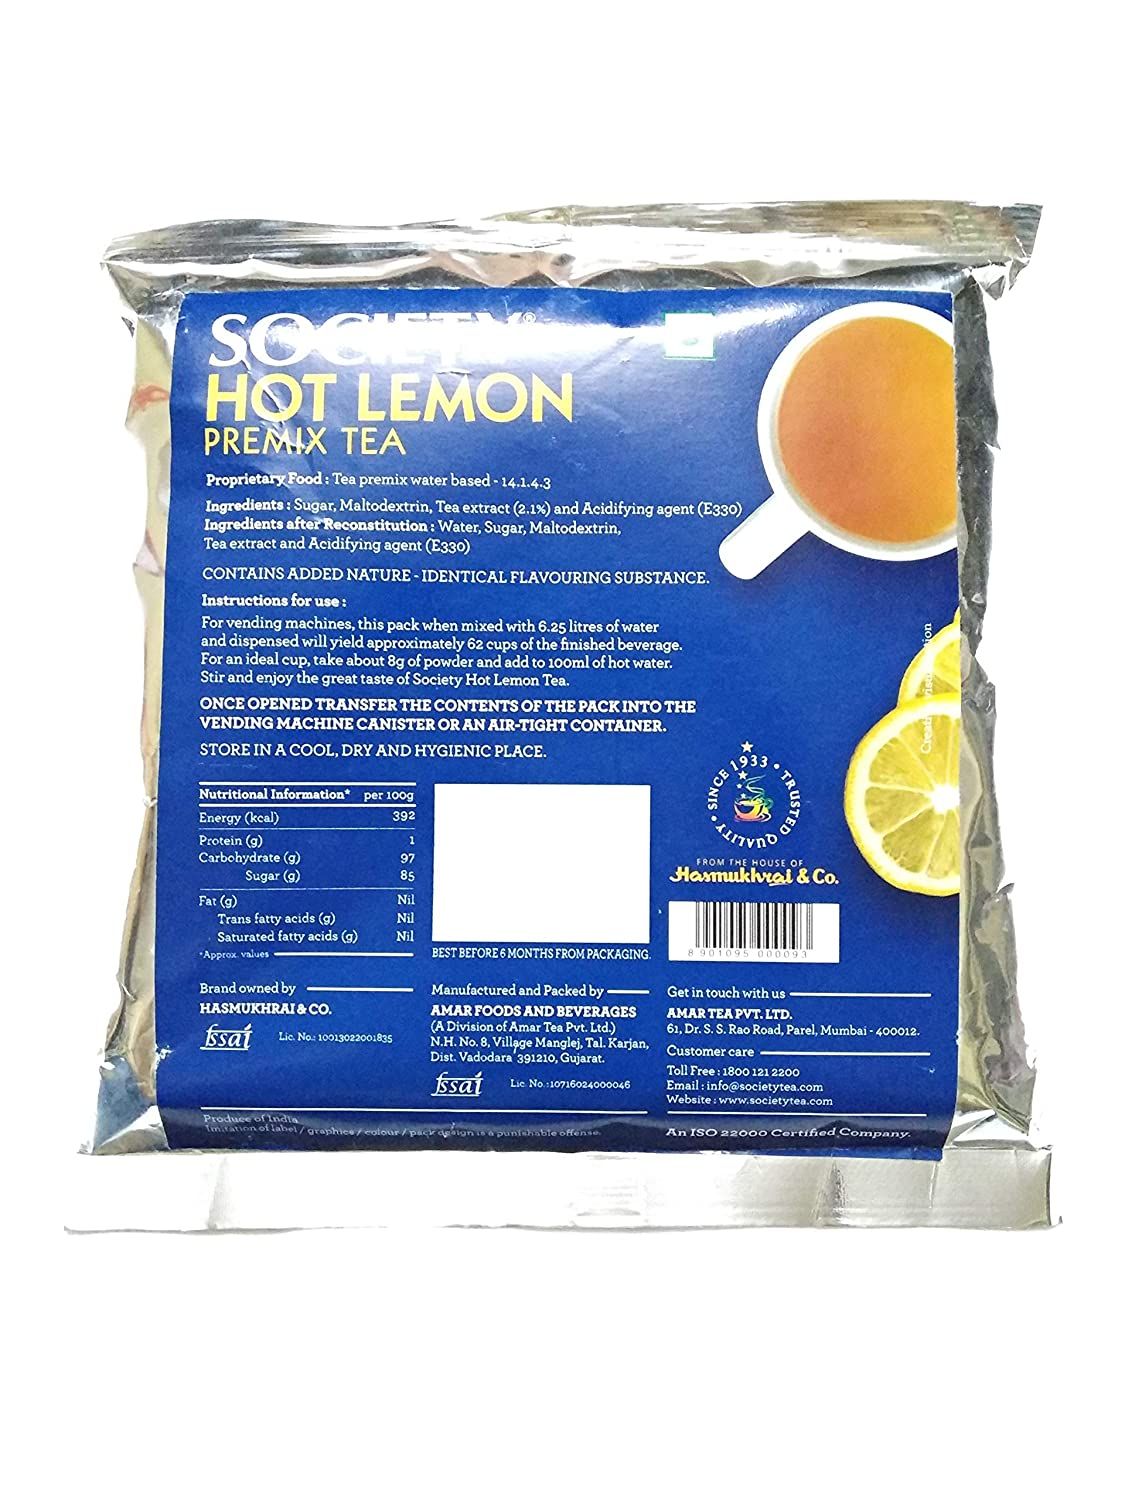 Society Tea Instant Hot Lemon Tea Premix Image